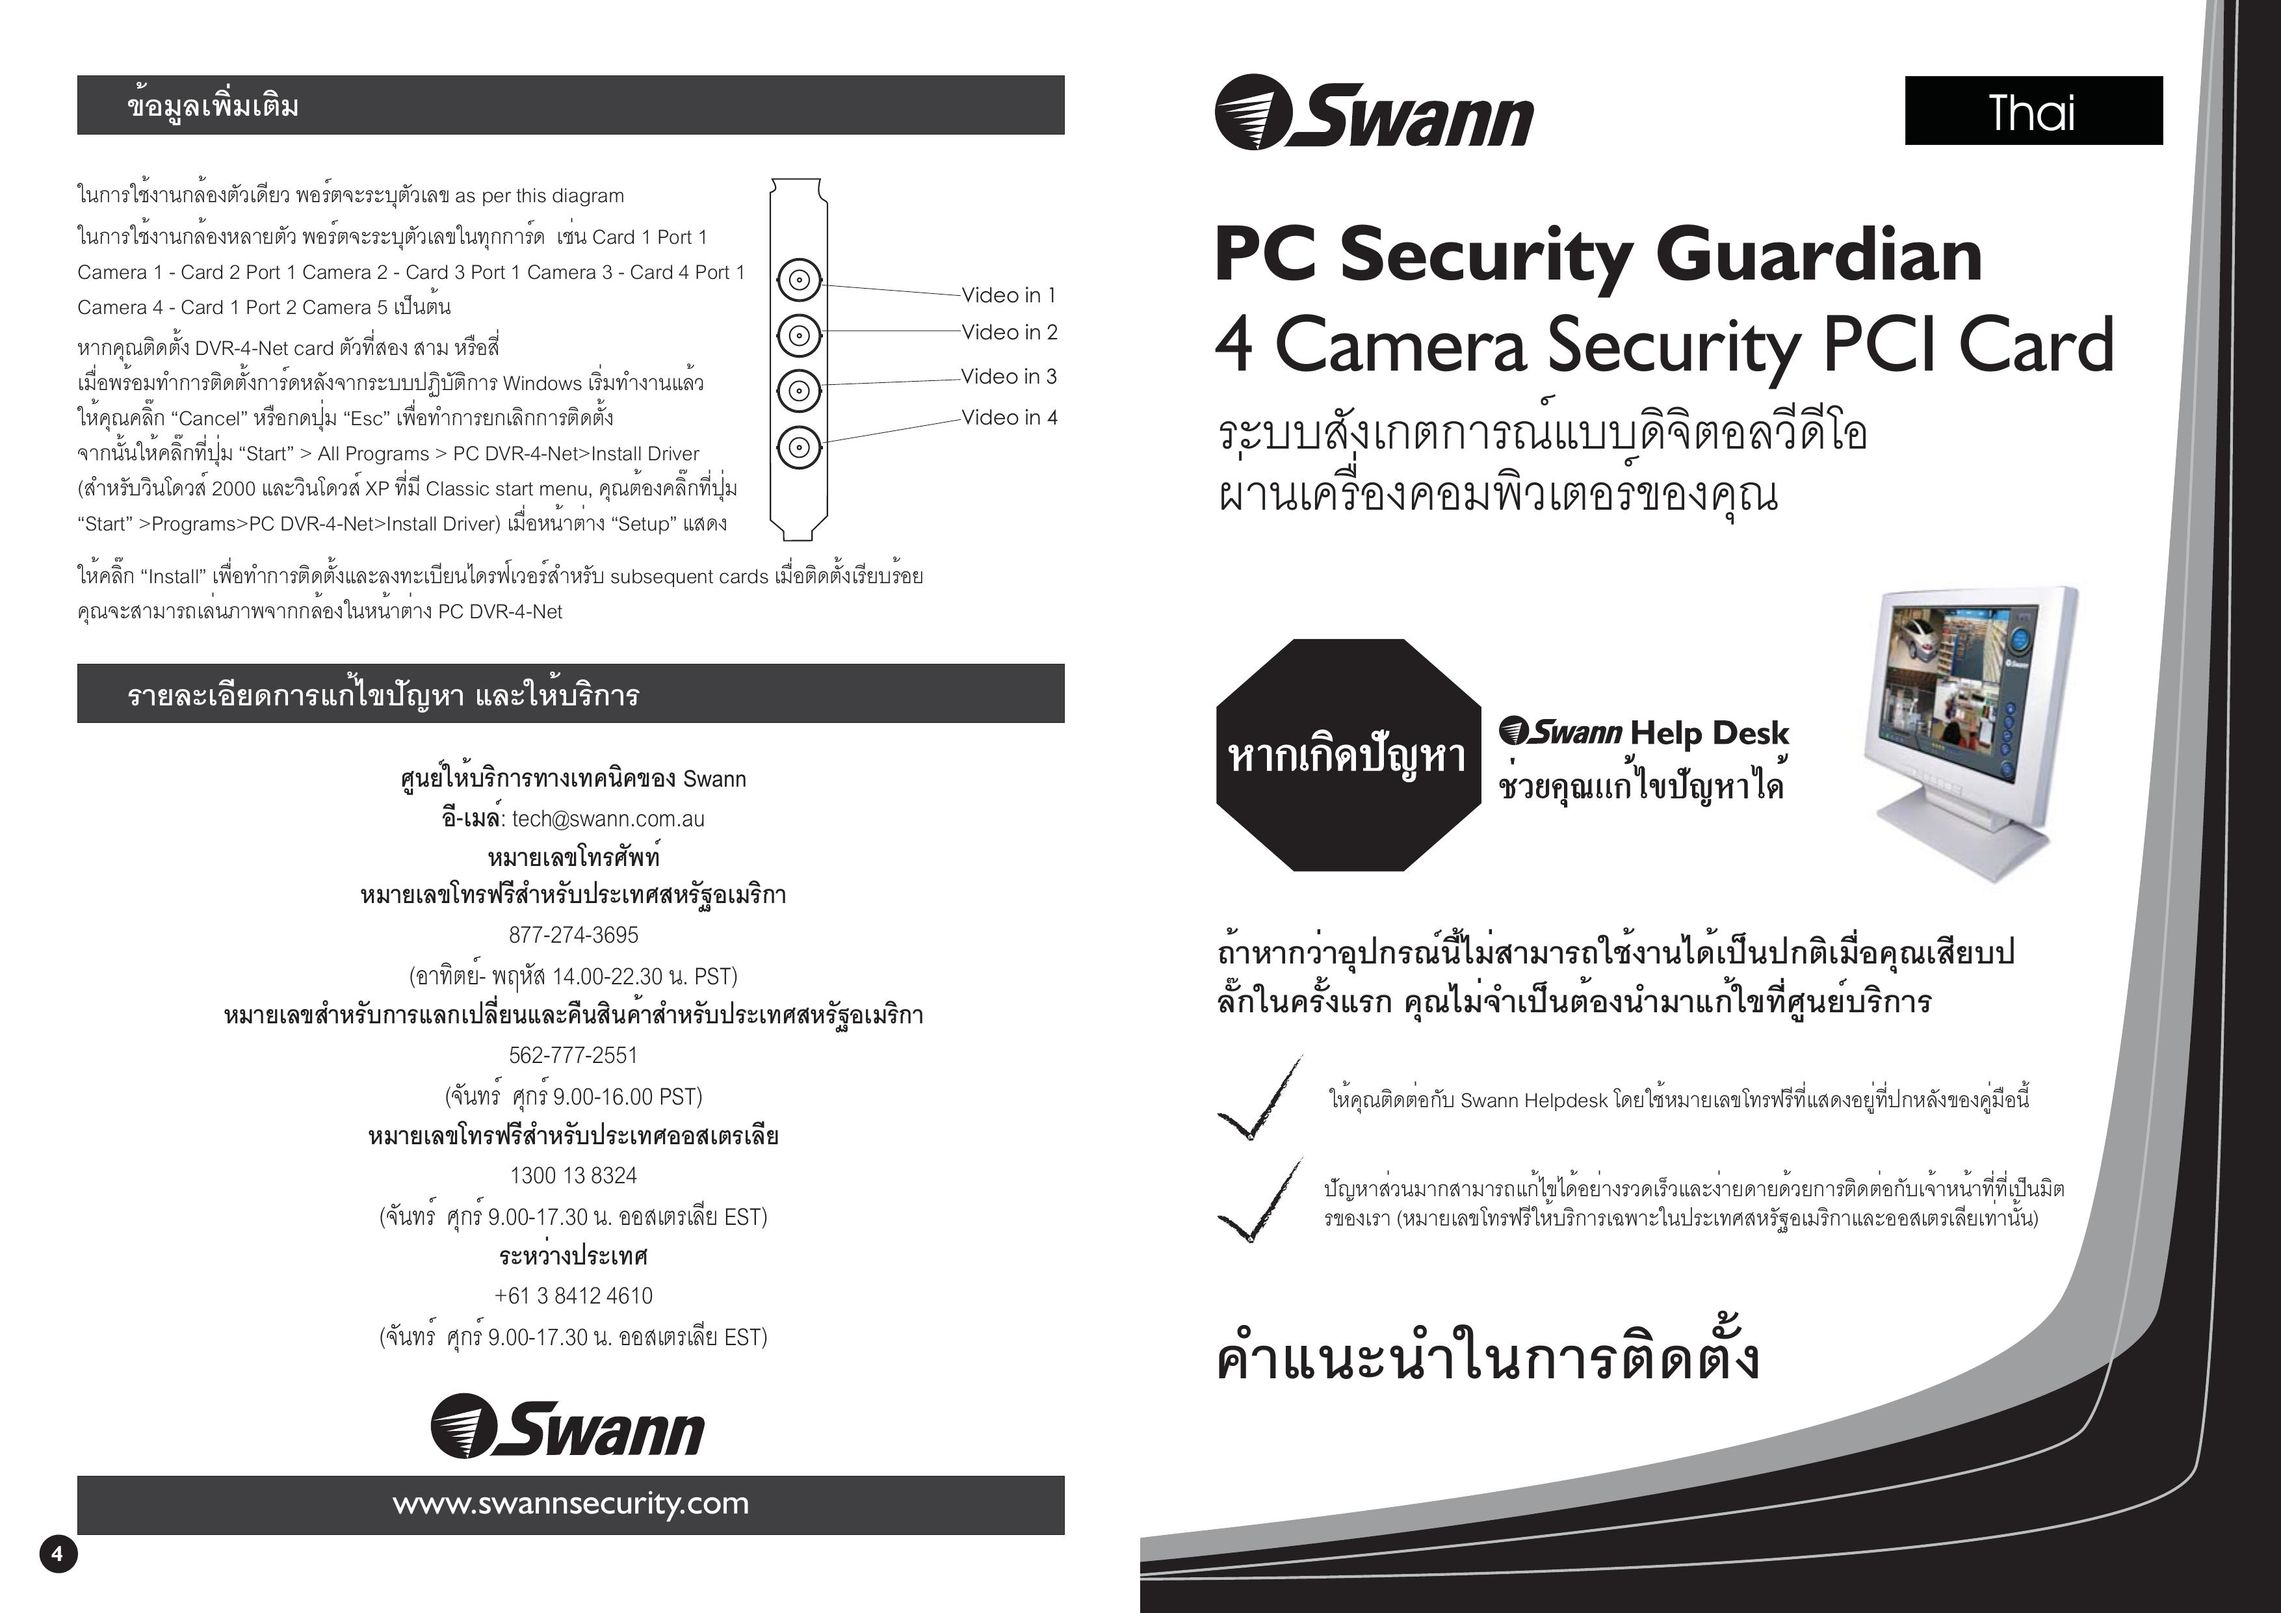 Swann PC Security Guardian Computer Hardware User Manual